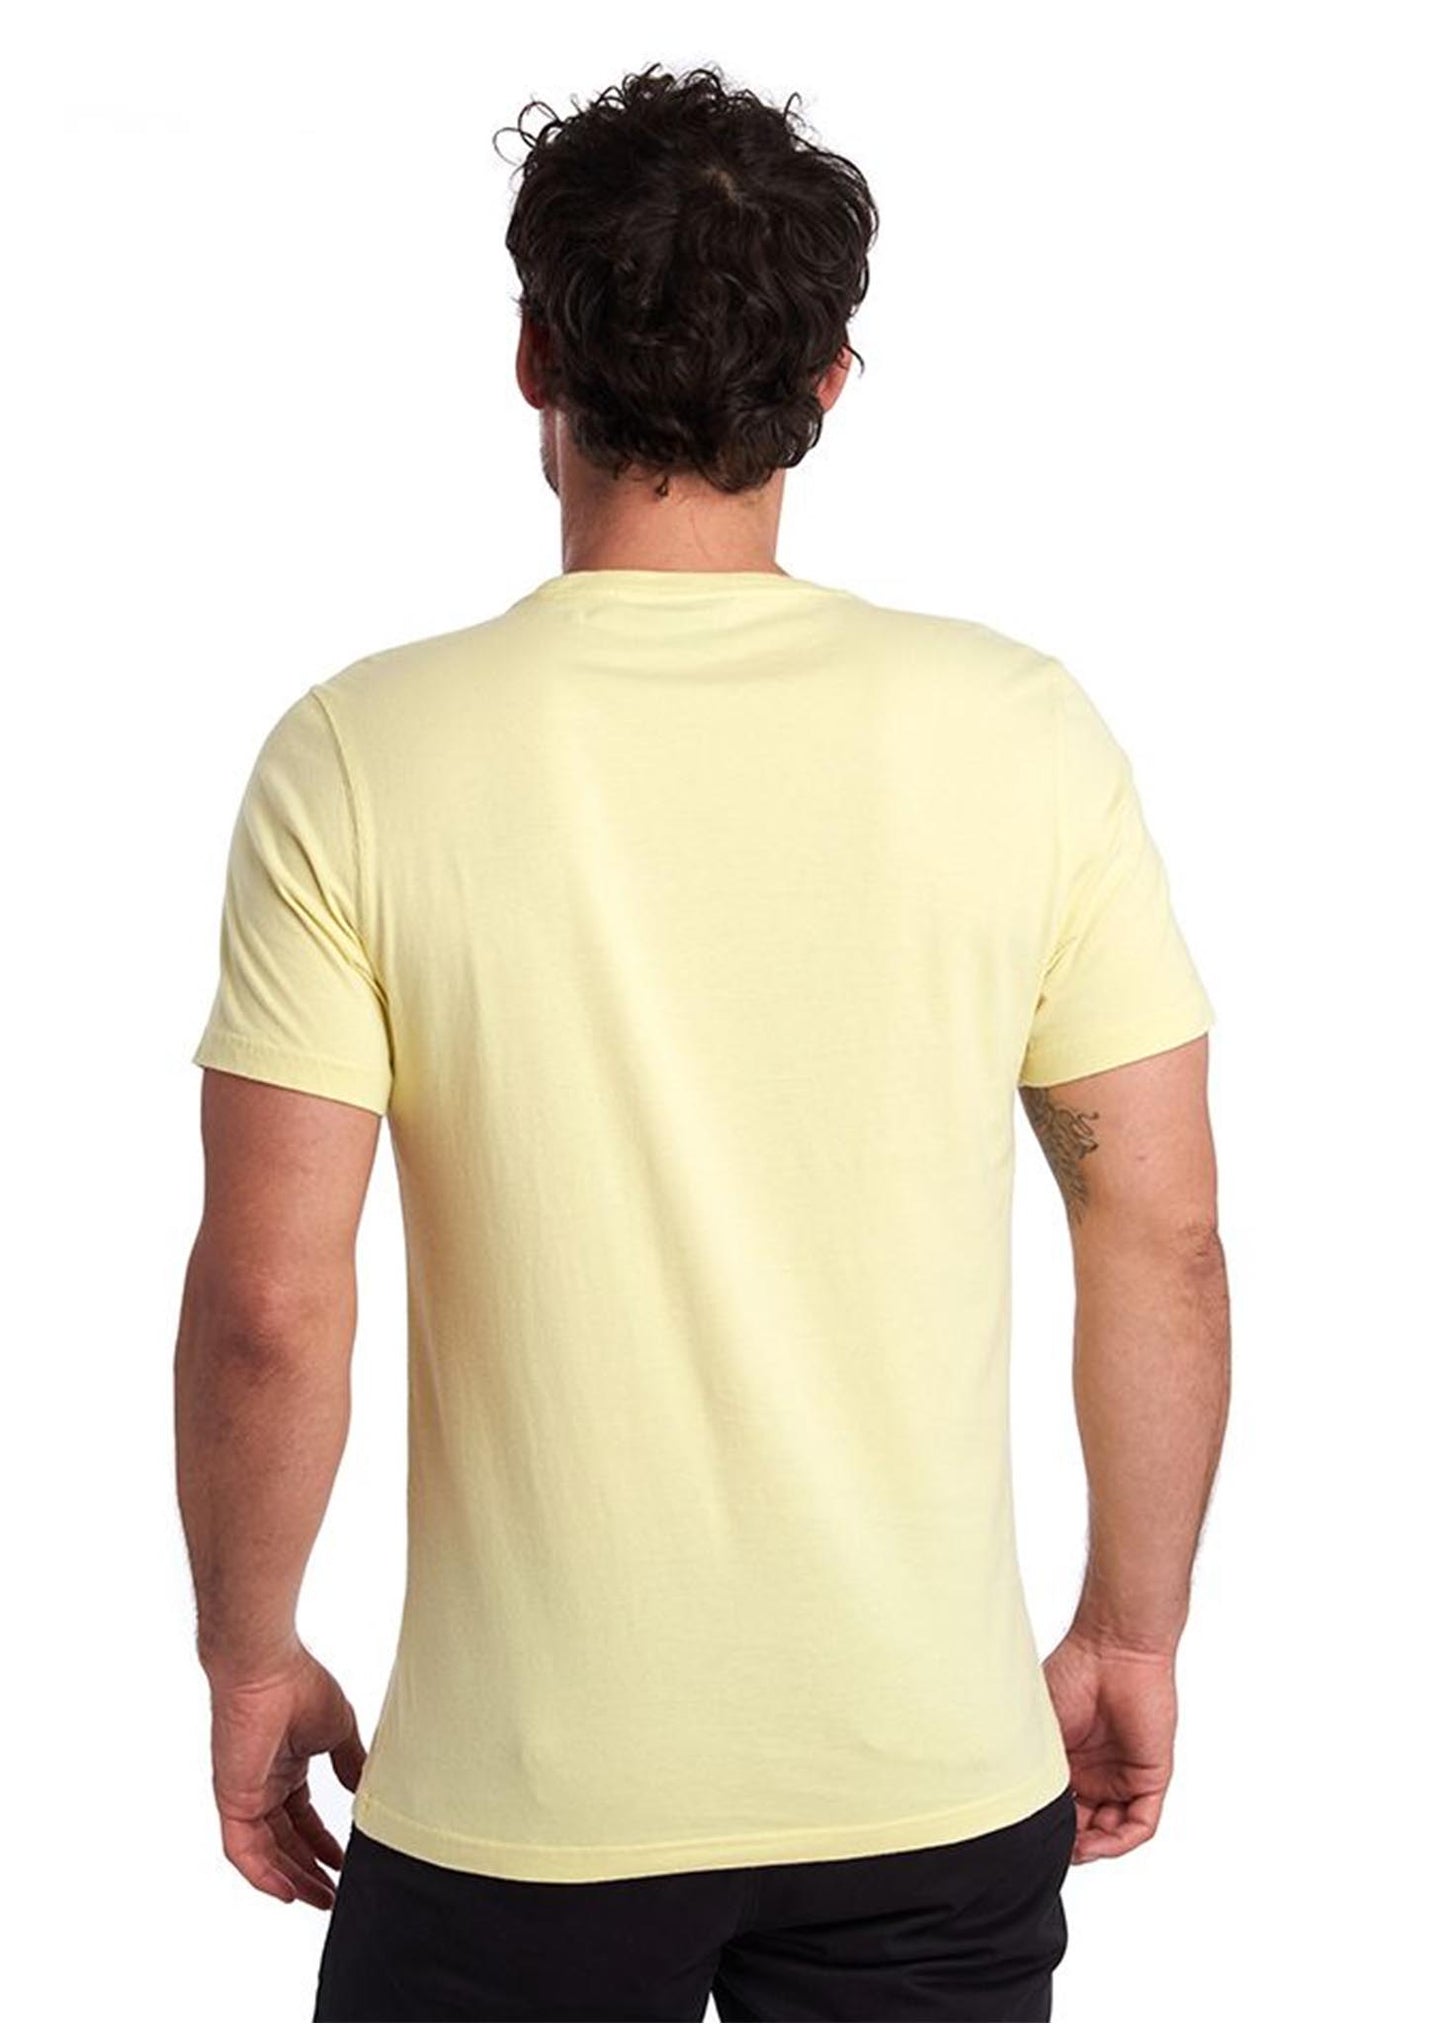 Barbour T-shirts  Chanonry tee - lemon 